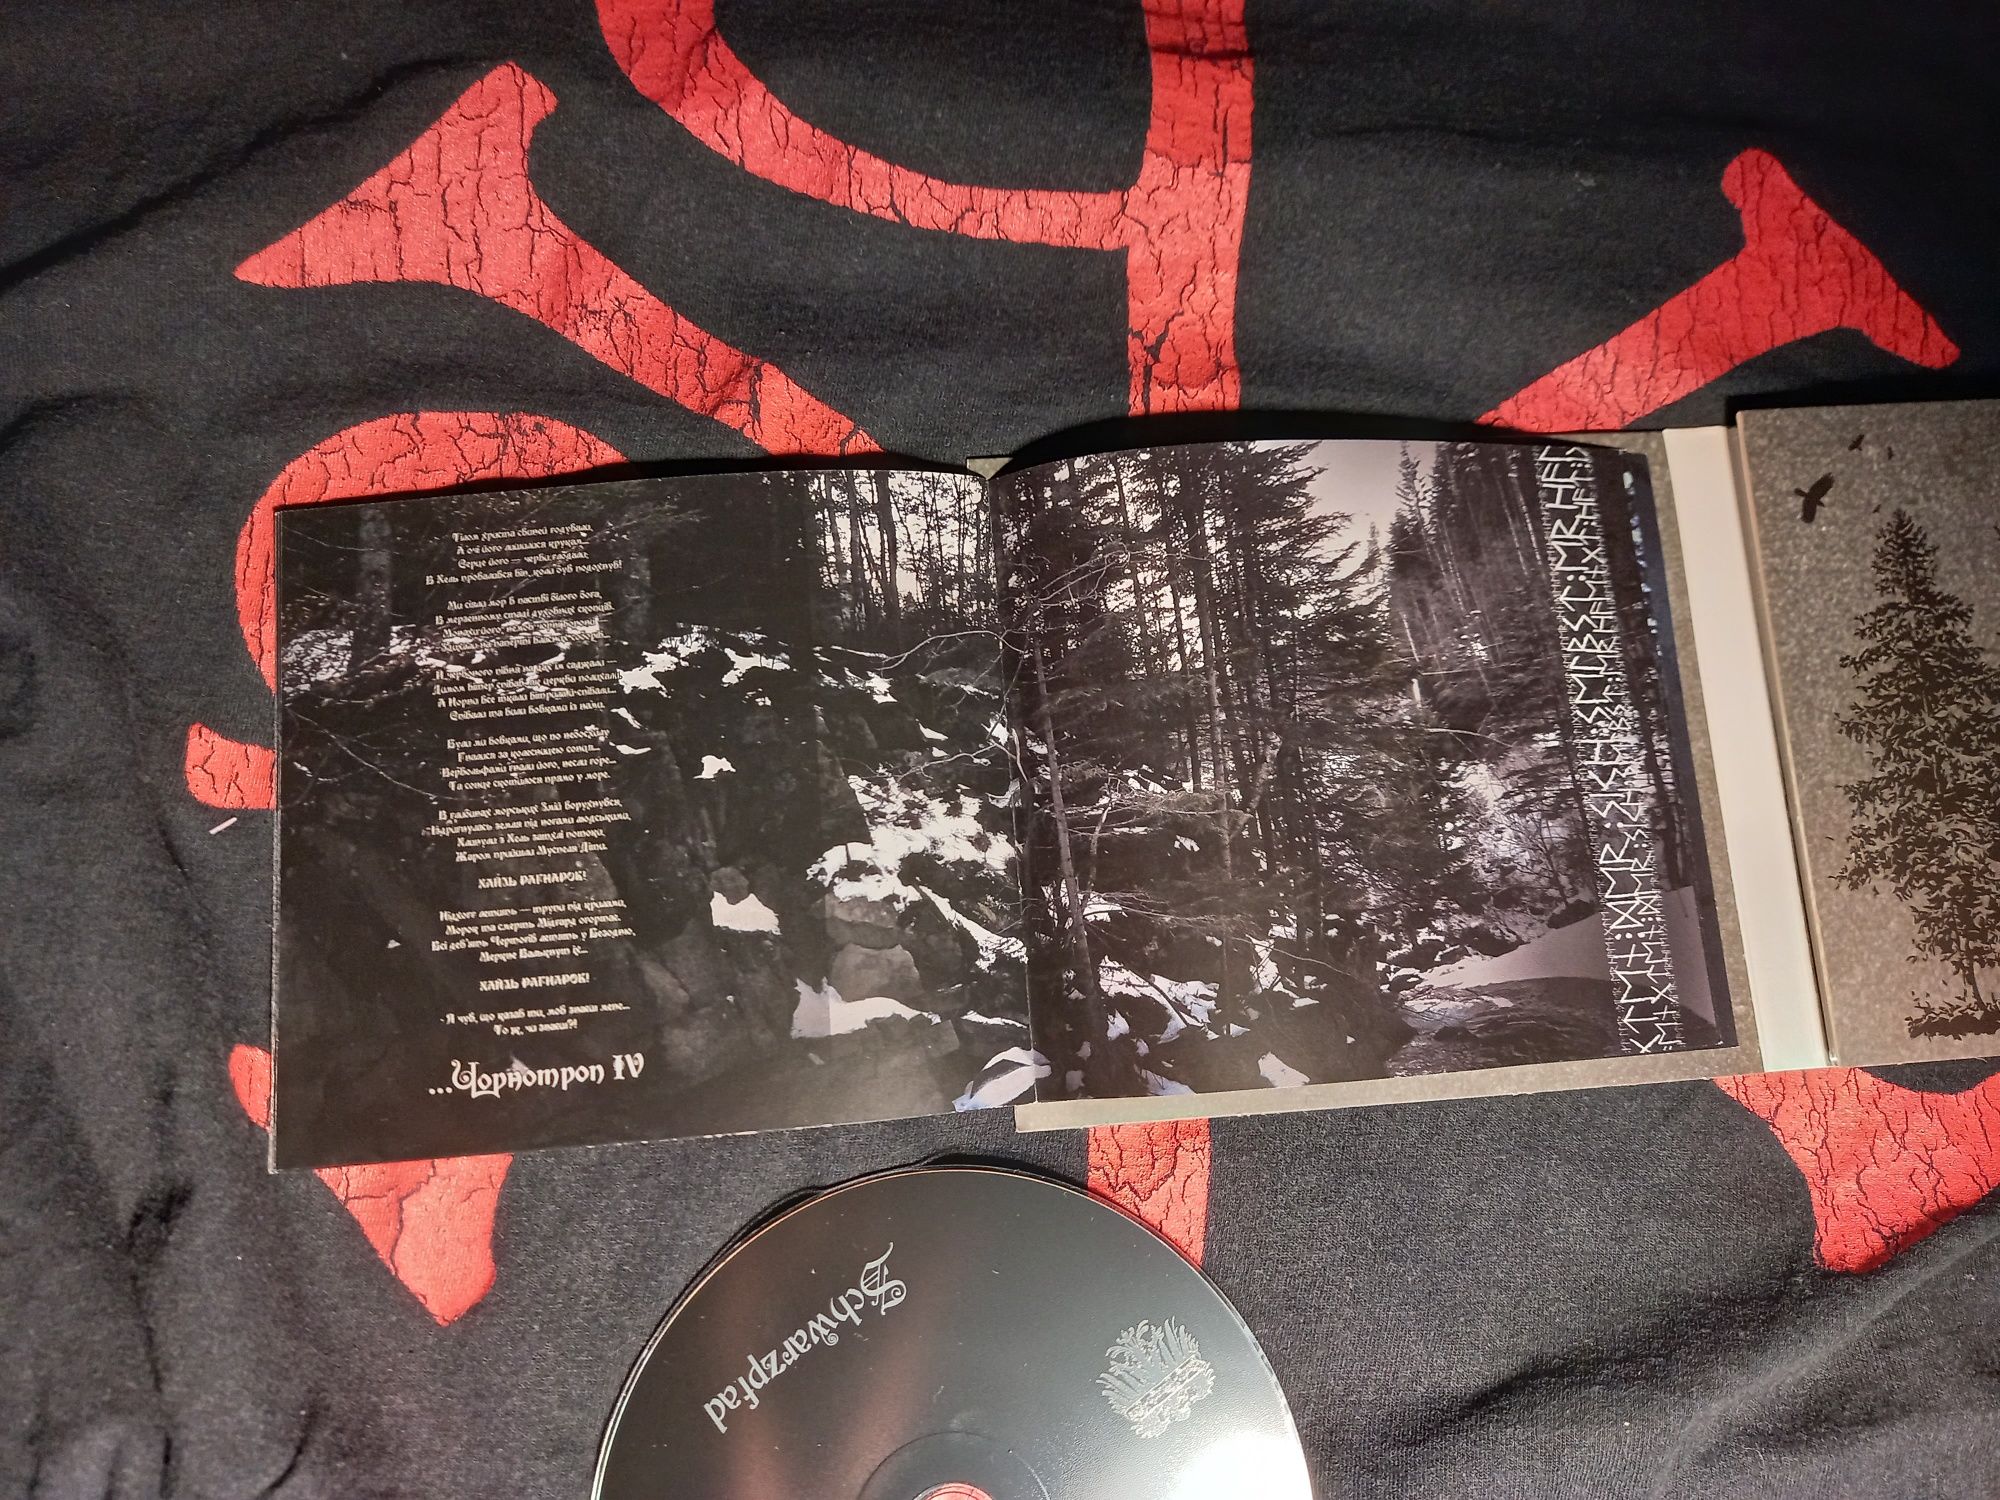 Kroda - Schwarzpfad CD